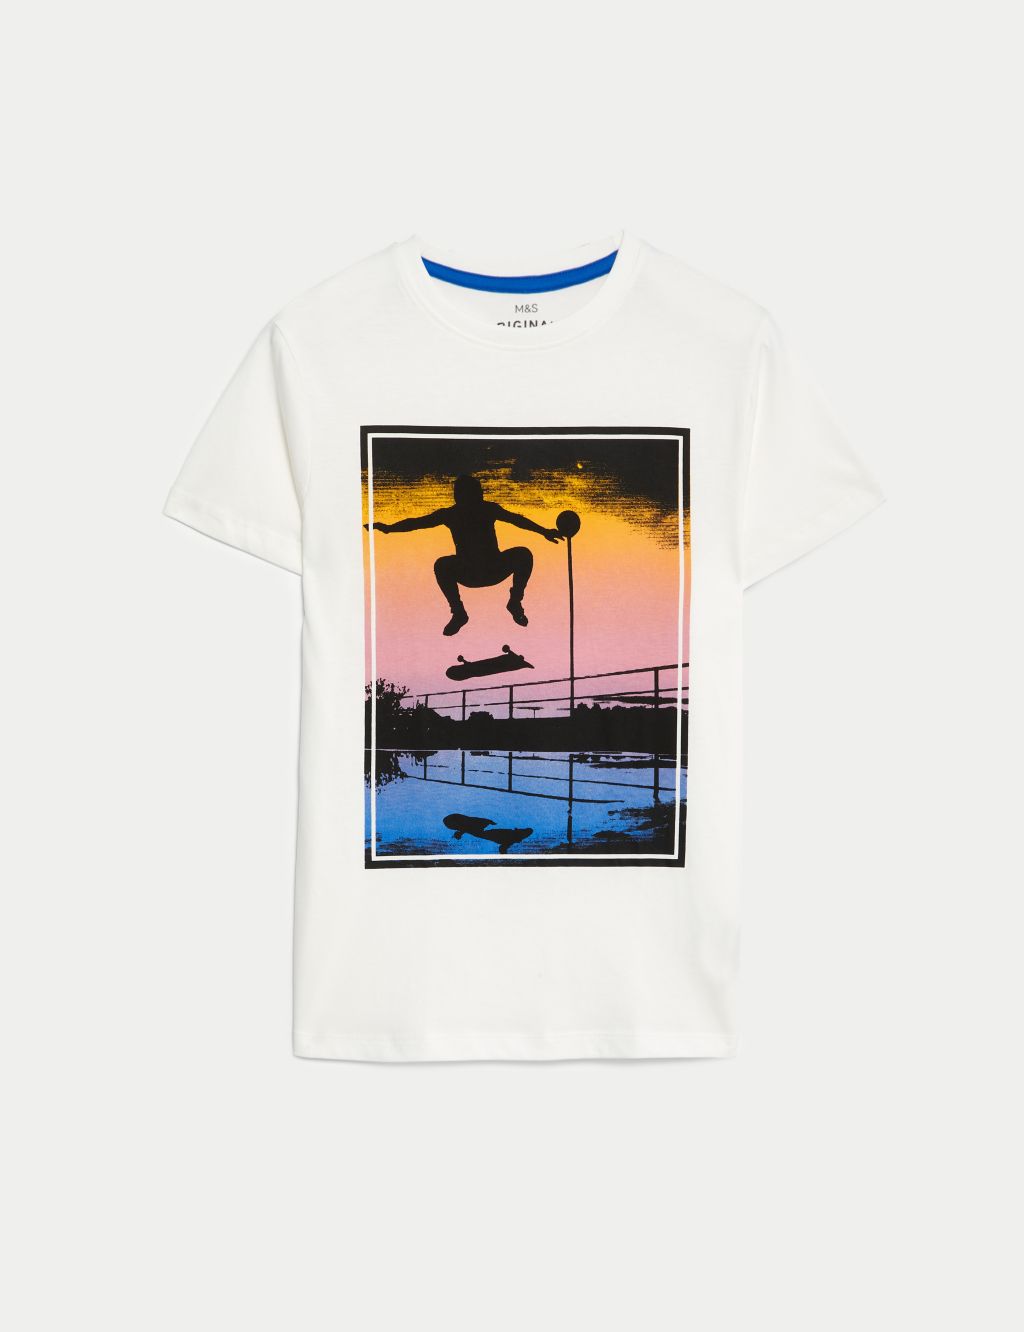 Pure Cotton Skate Print T-Shirt (6-16 Yrs)